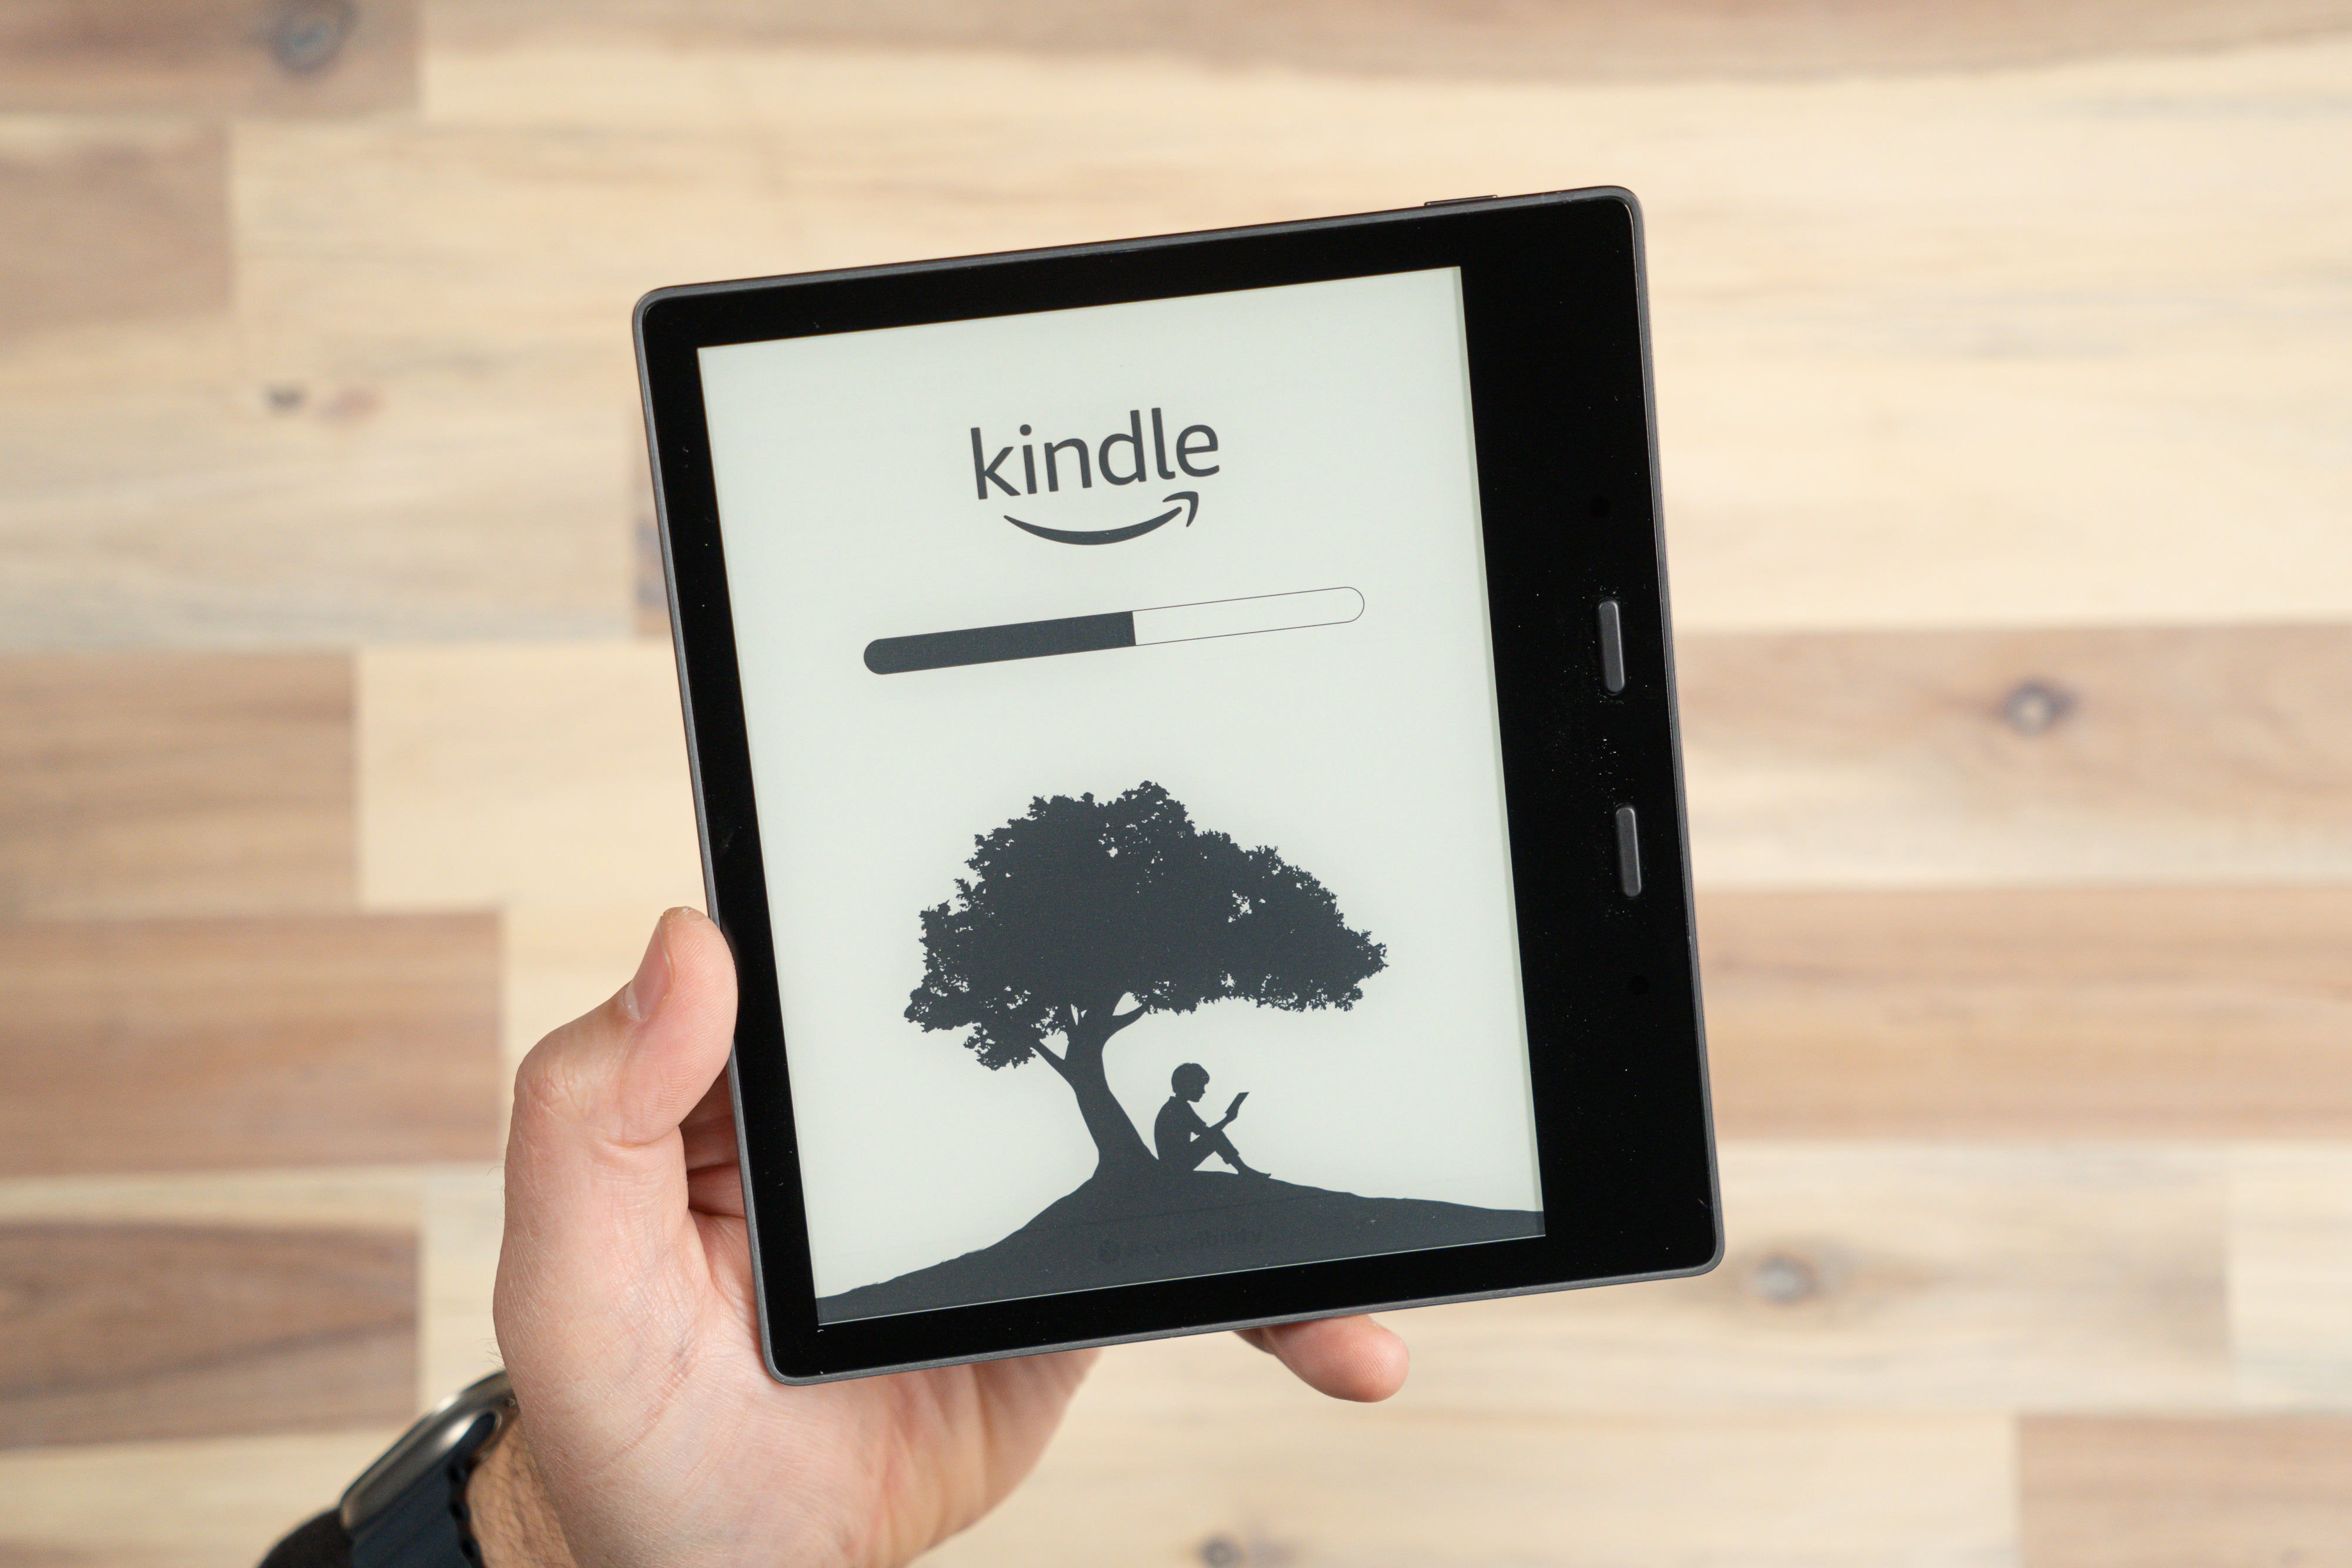 Amazon Kindle Oasis 10th Generation With adjustable warm light